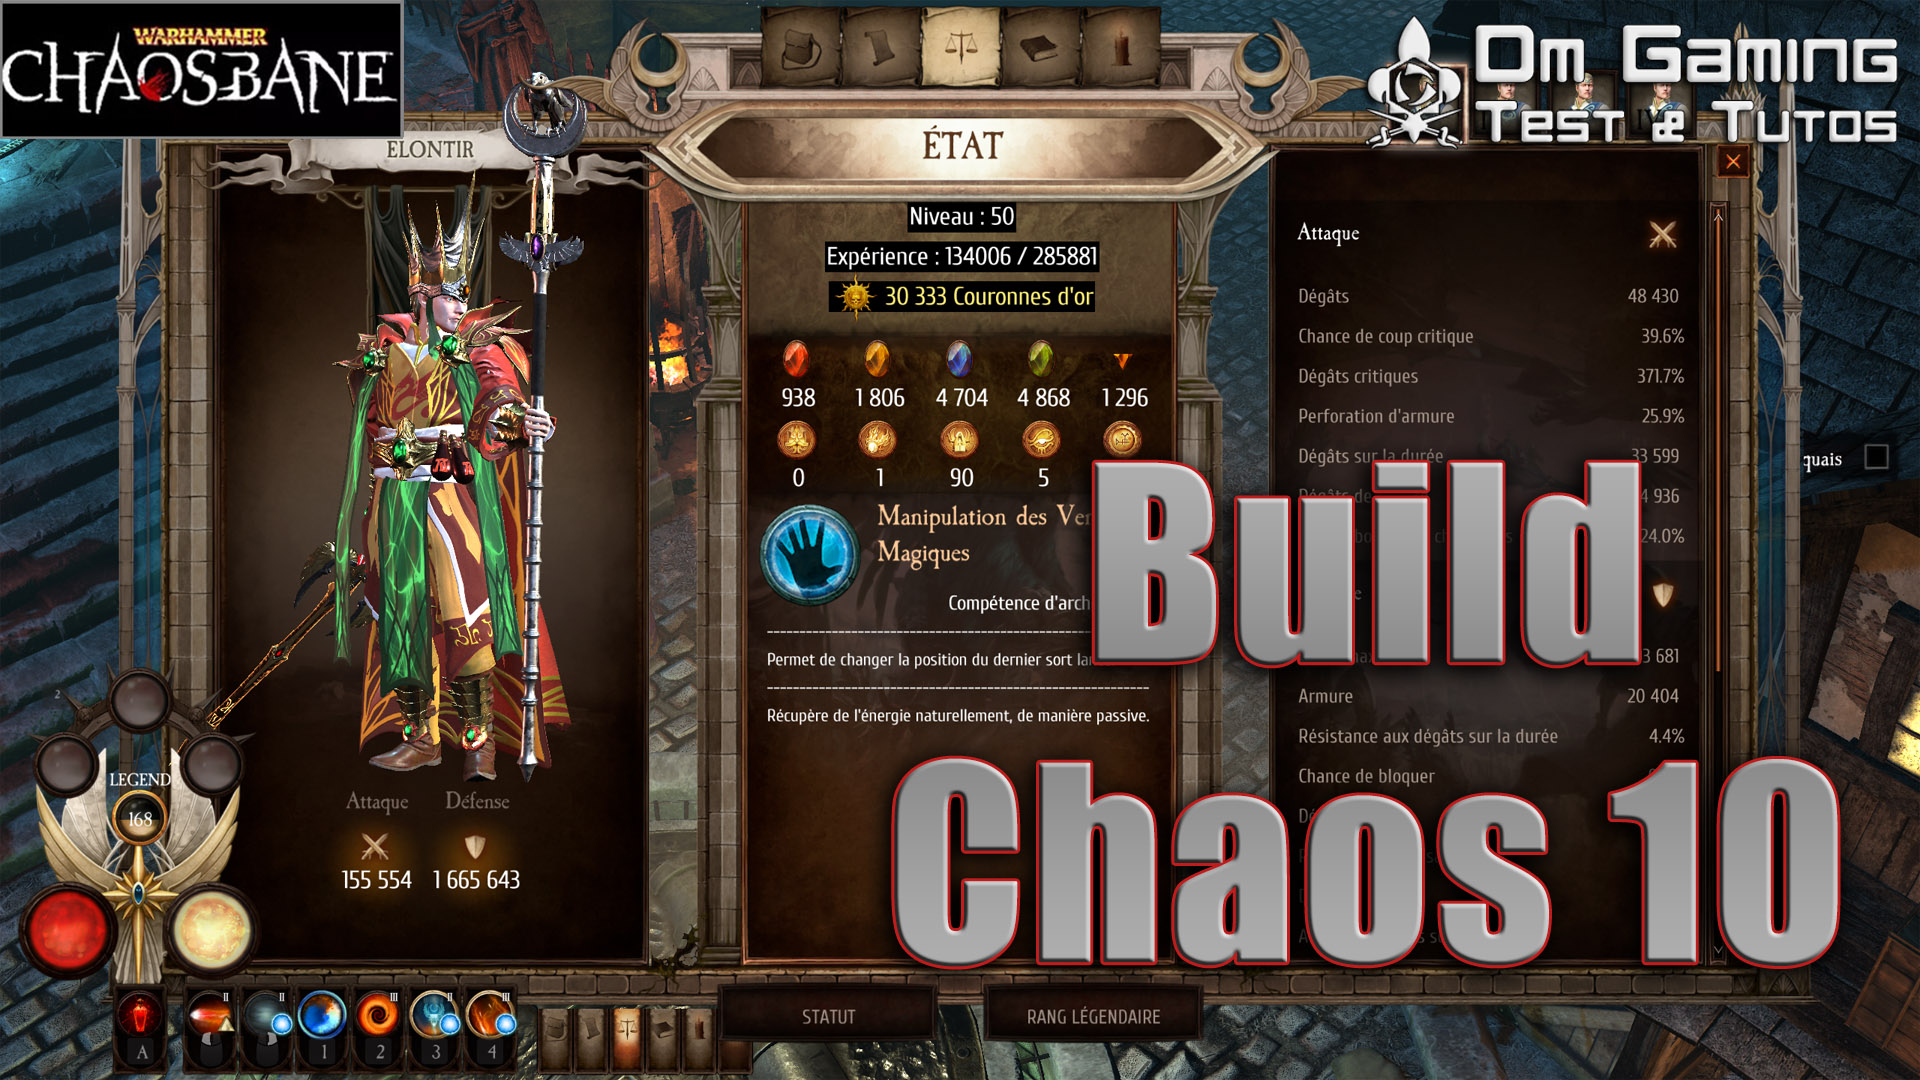 build chaos 10 mage warhammer chaosbane